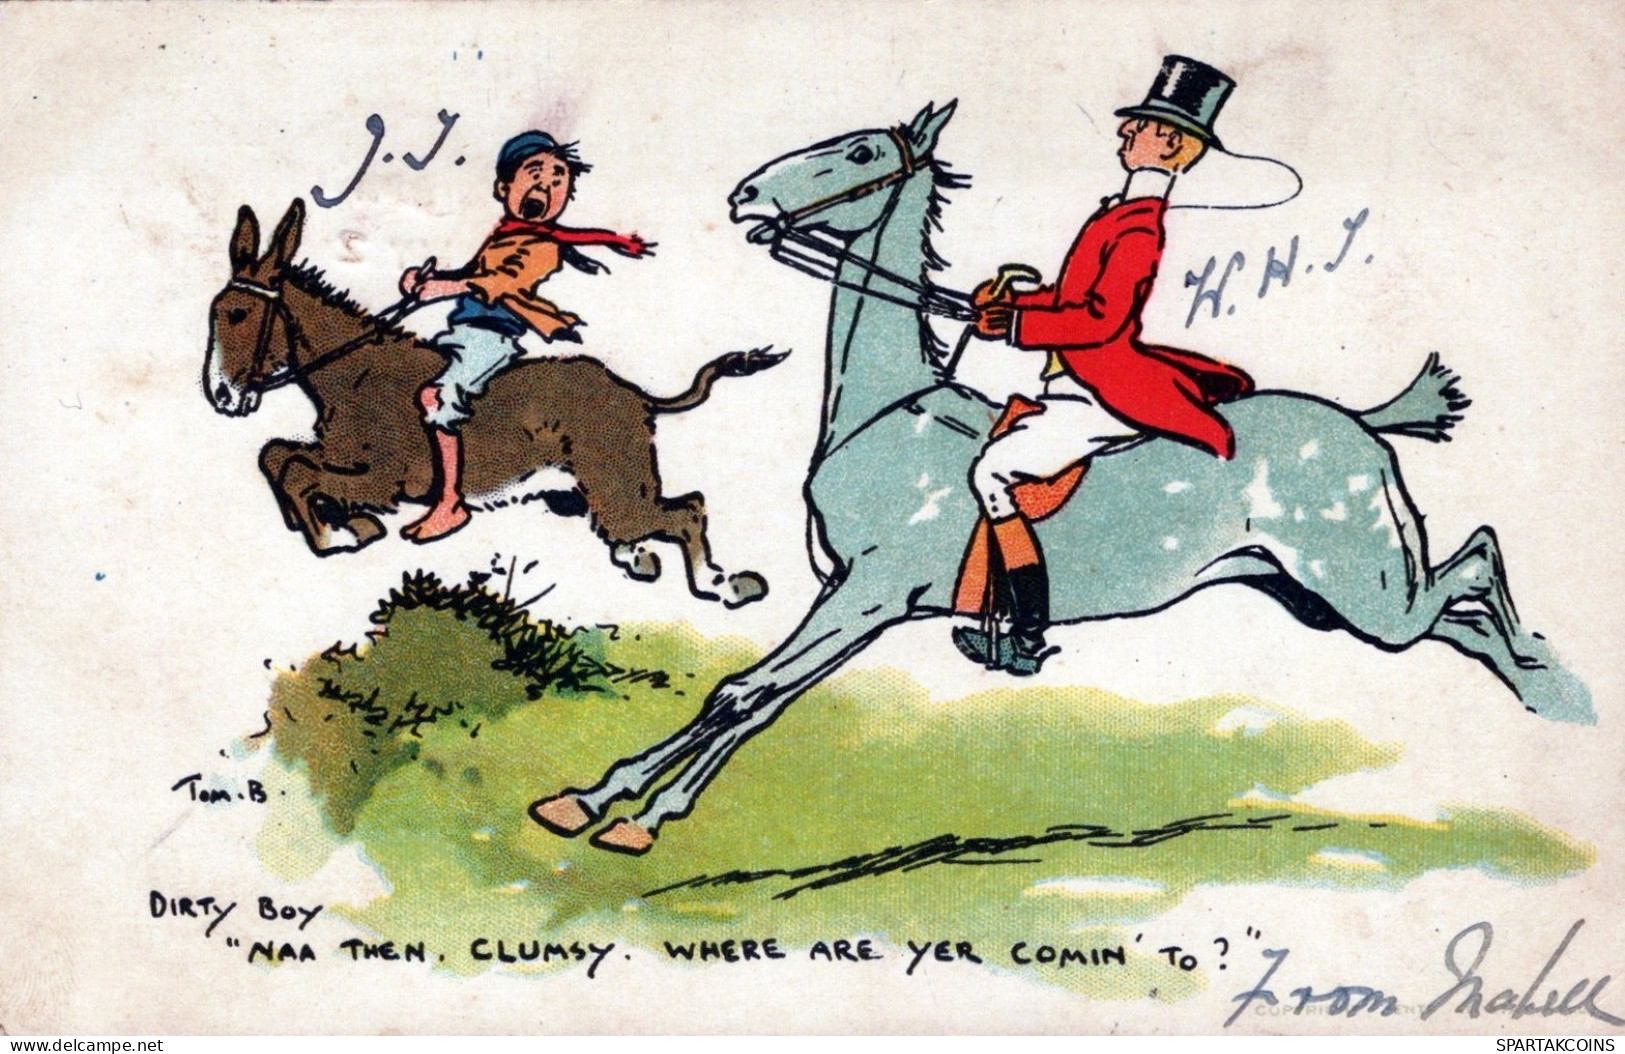 ESEL Tiere Vintage Antik Alt CPA Ansichtskarte Postkarte #PAA316.A - Donkeys